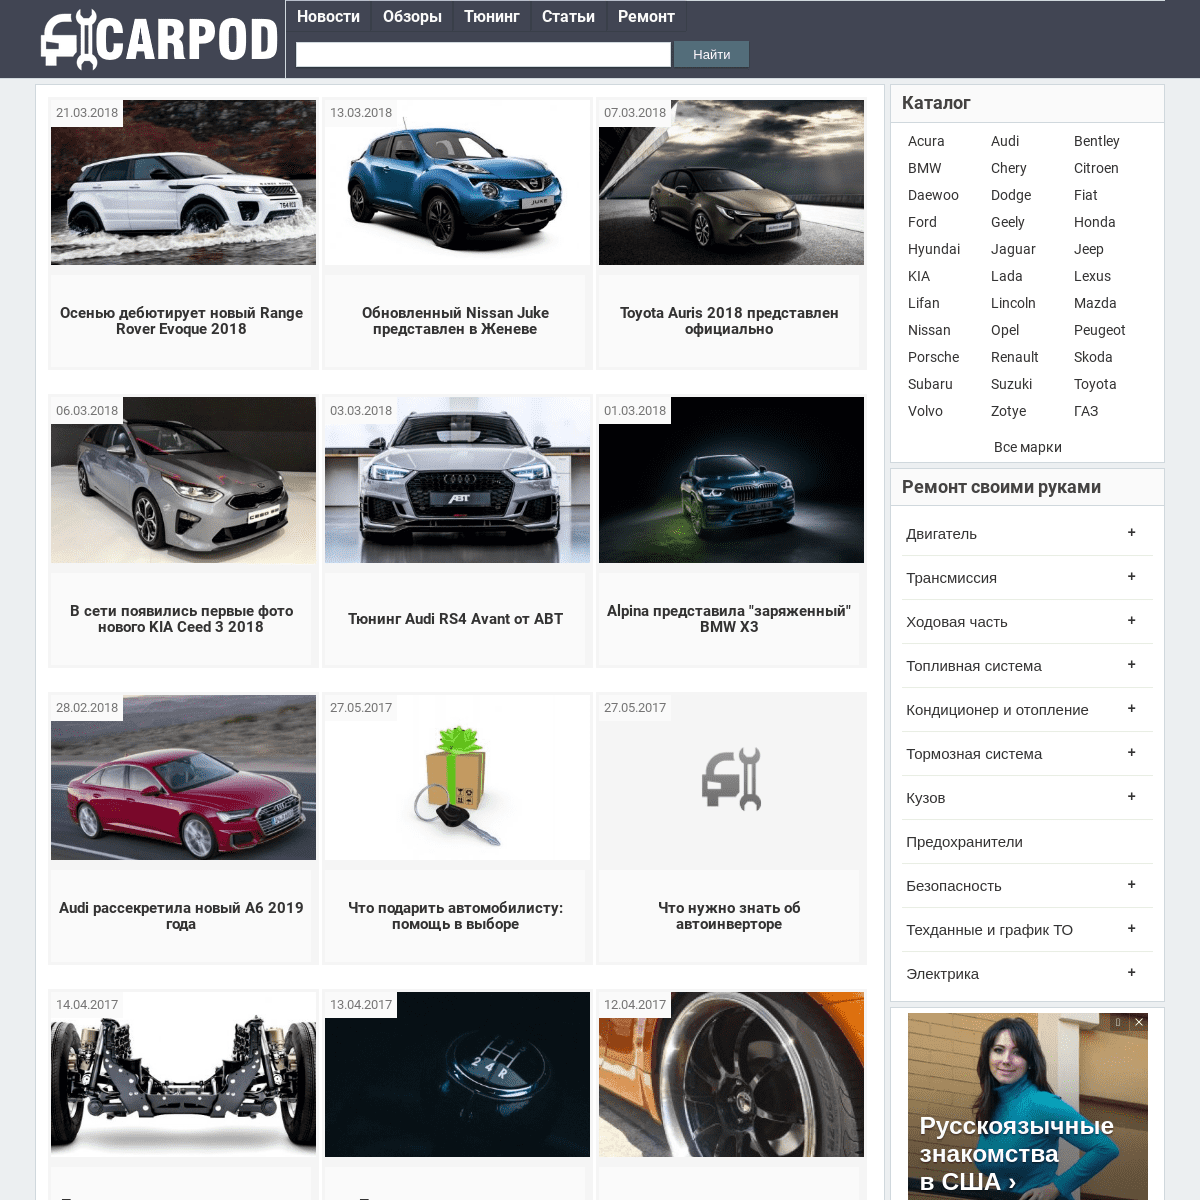 A complete backup of carpod.ru